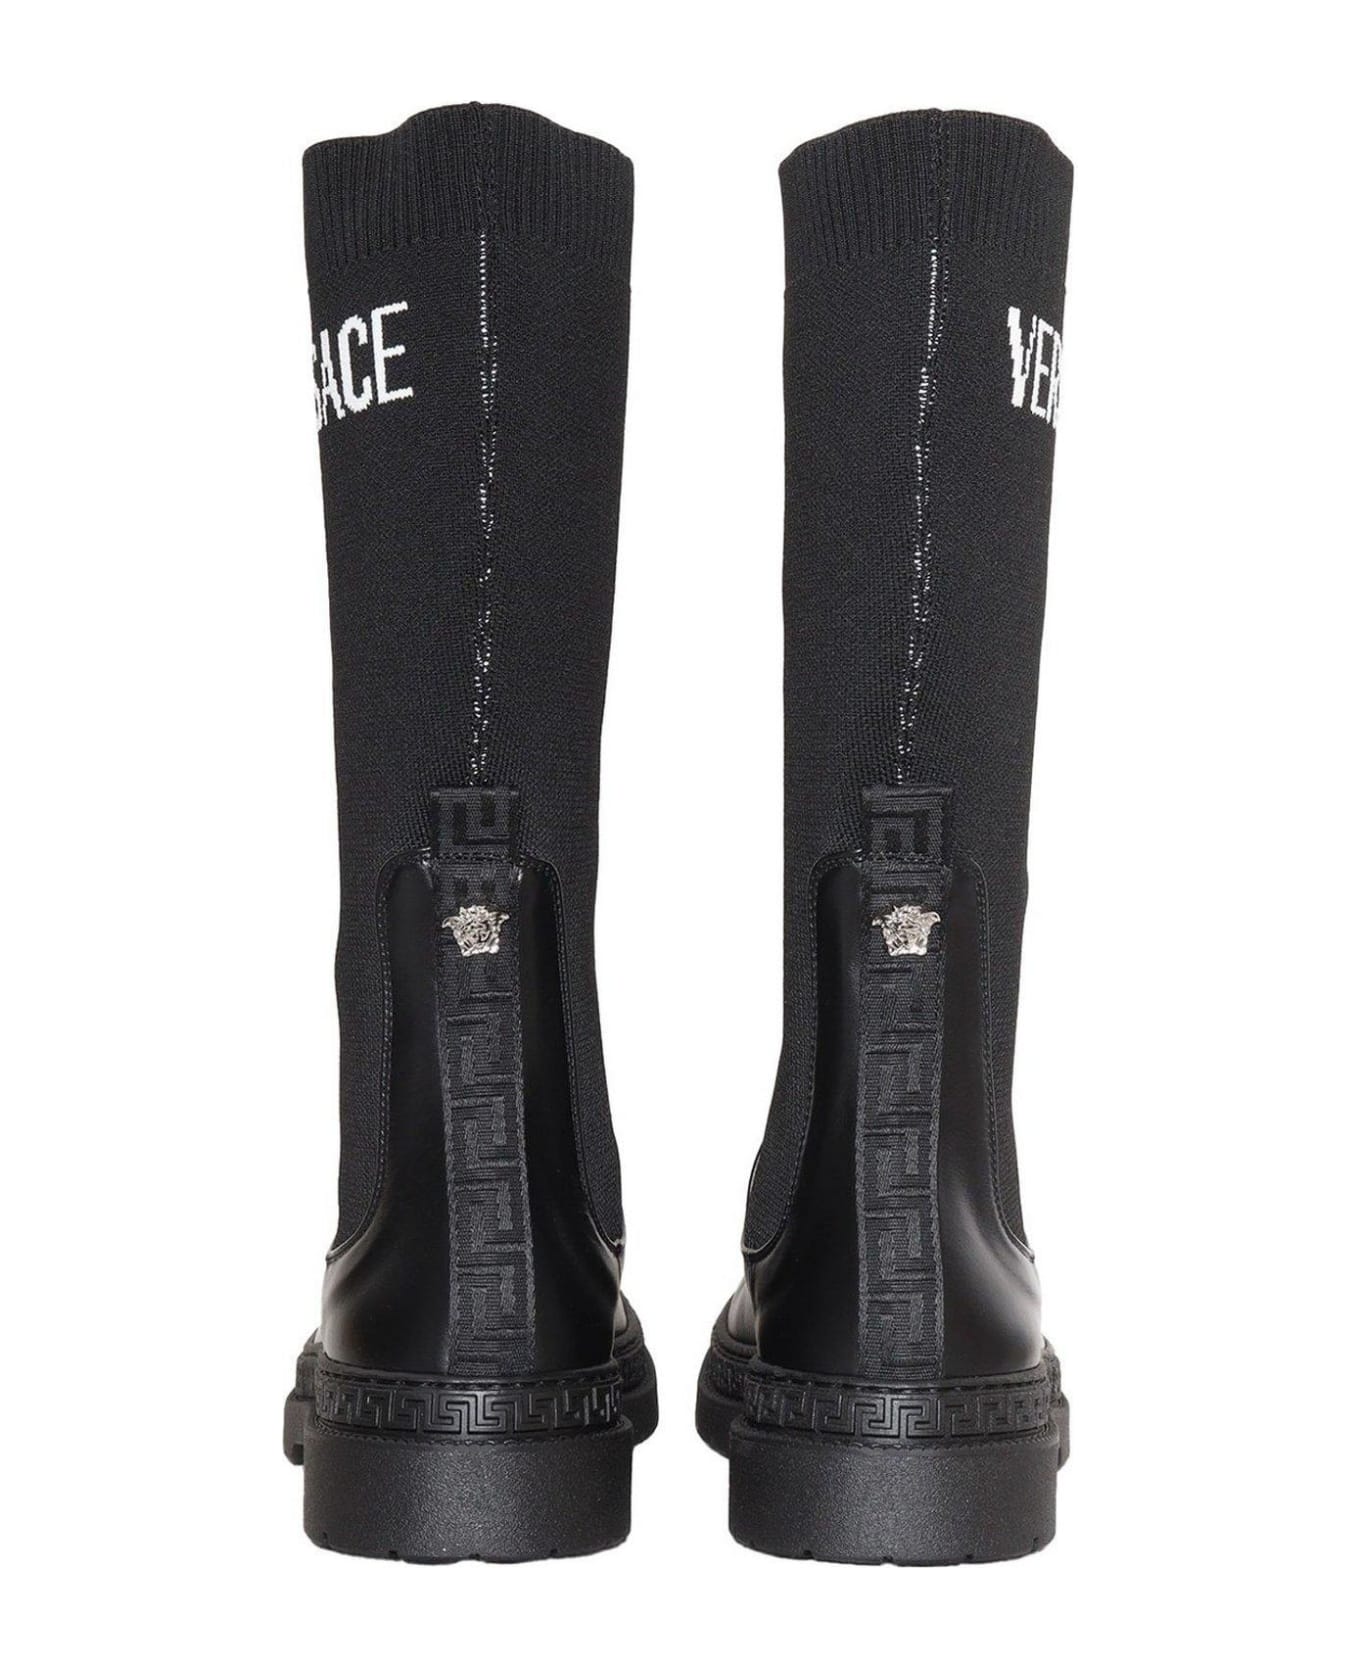 Young Versace Logo Intarsia Round Toe Boots - P Nero Bianco Palladio シューズ